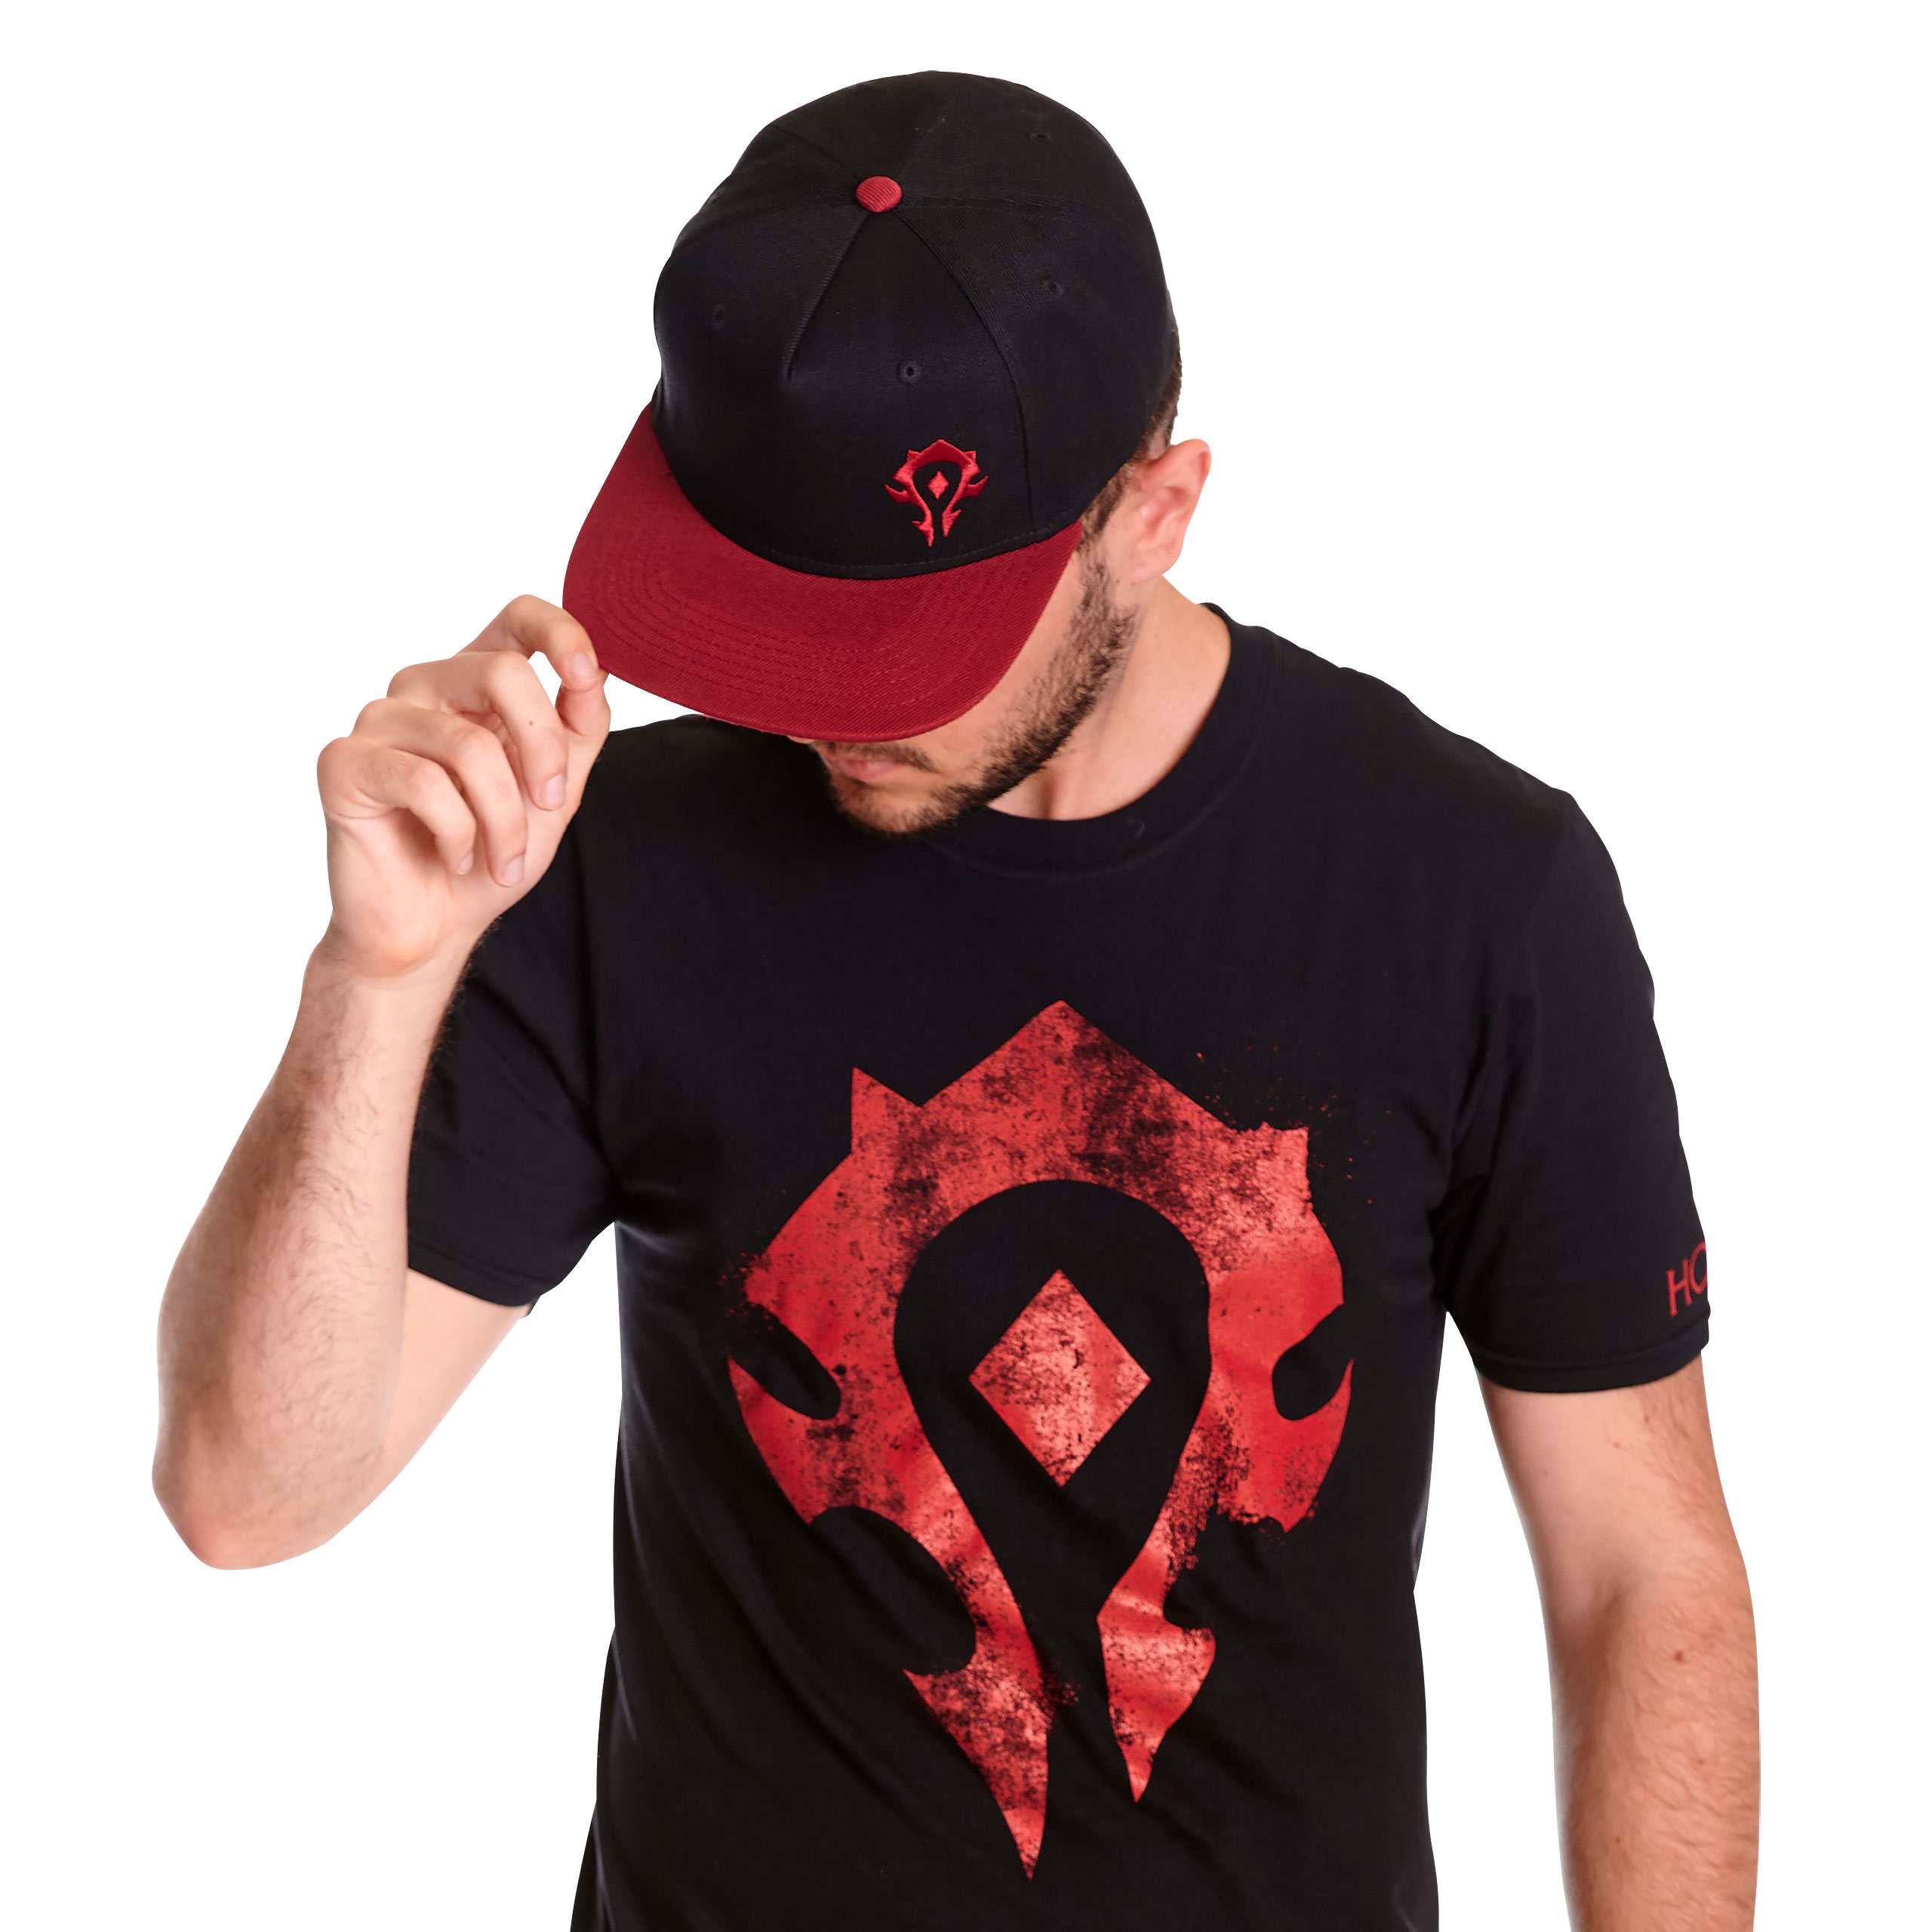 World of Warcraft - Horde Logo Snapback Cap zwart-rood